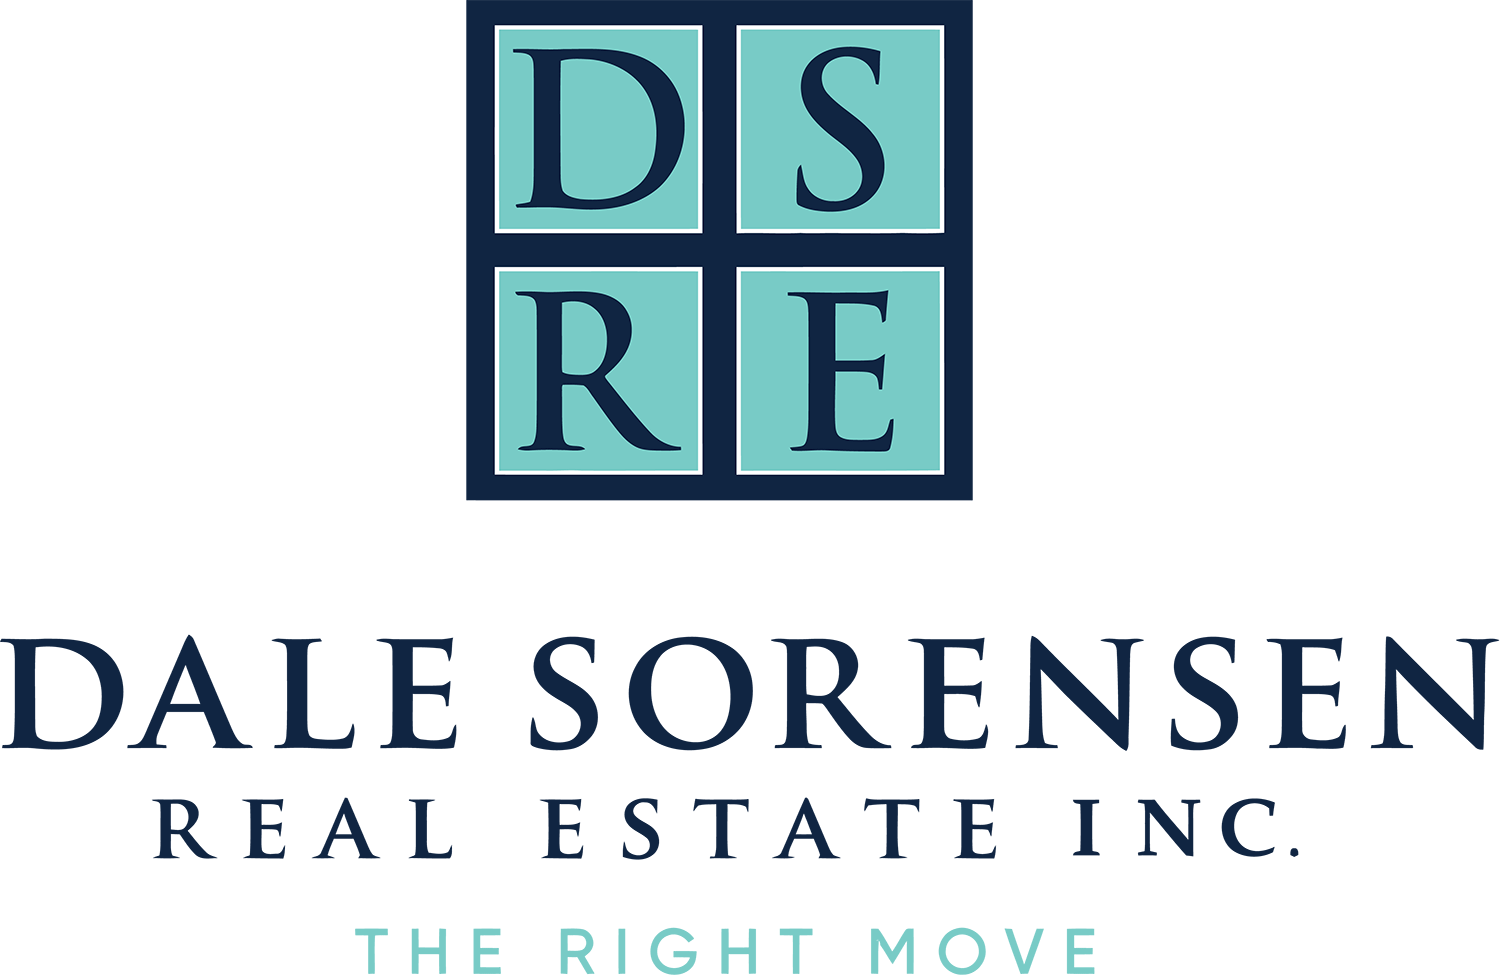 Dale Sorensen Real Estate Inc.